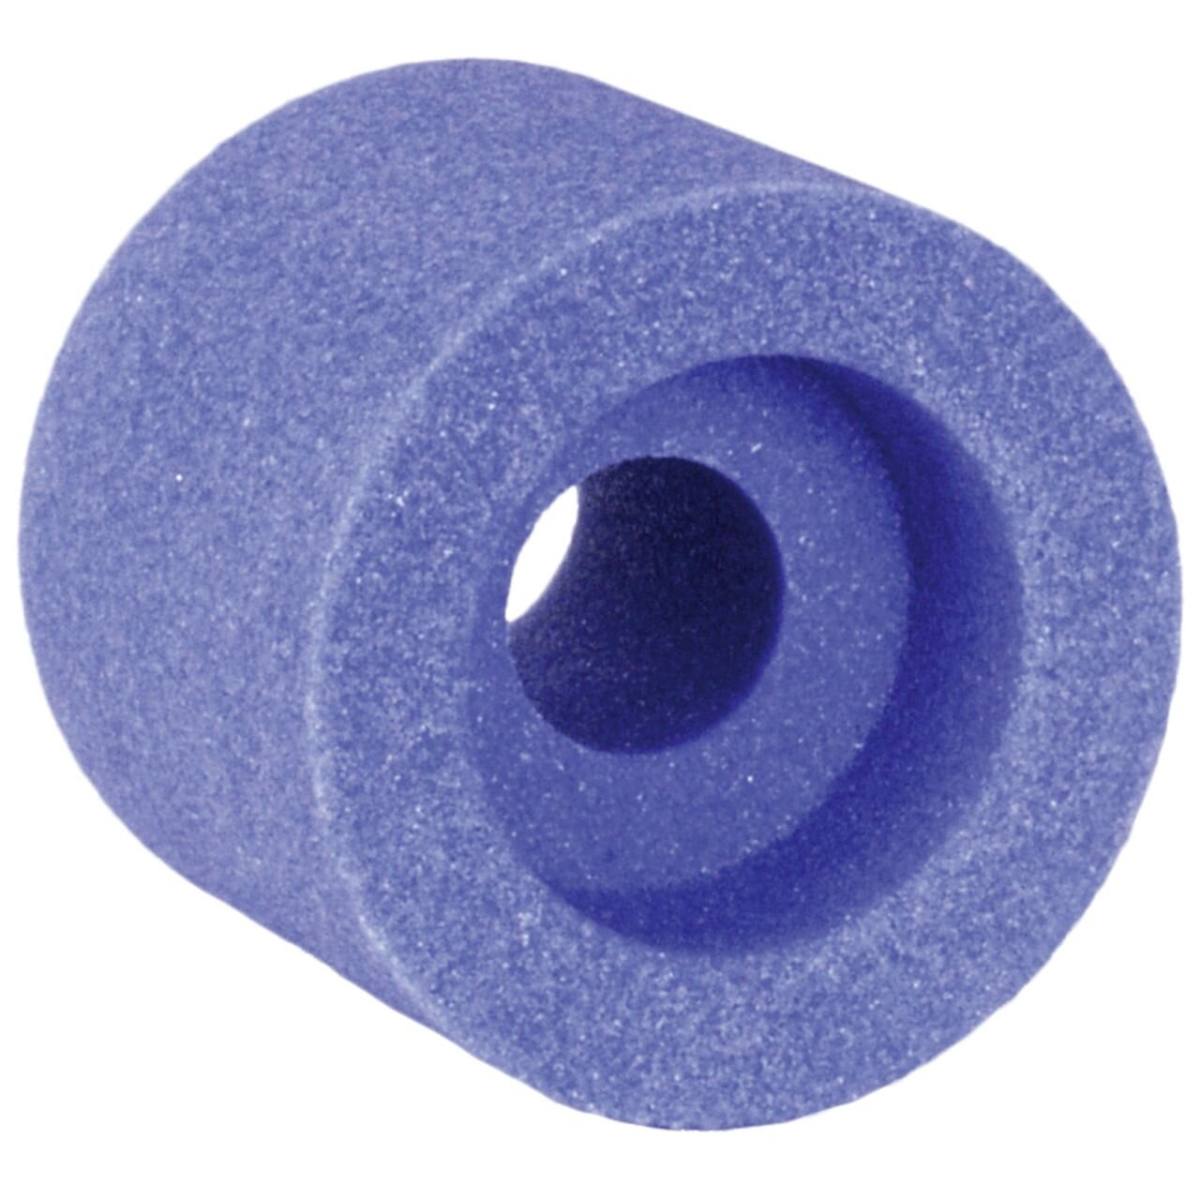 Tyrolit rettifica cilindrica interna in ceramica convenzionale DxDxH 25x25x10 Per acciai altamente legati e HSS, forma: 5, Art. 747516